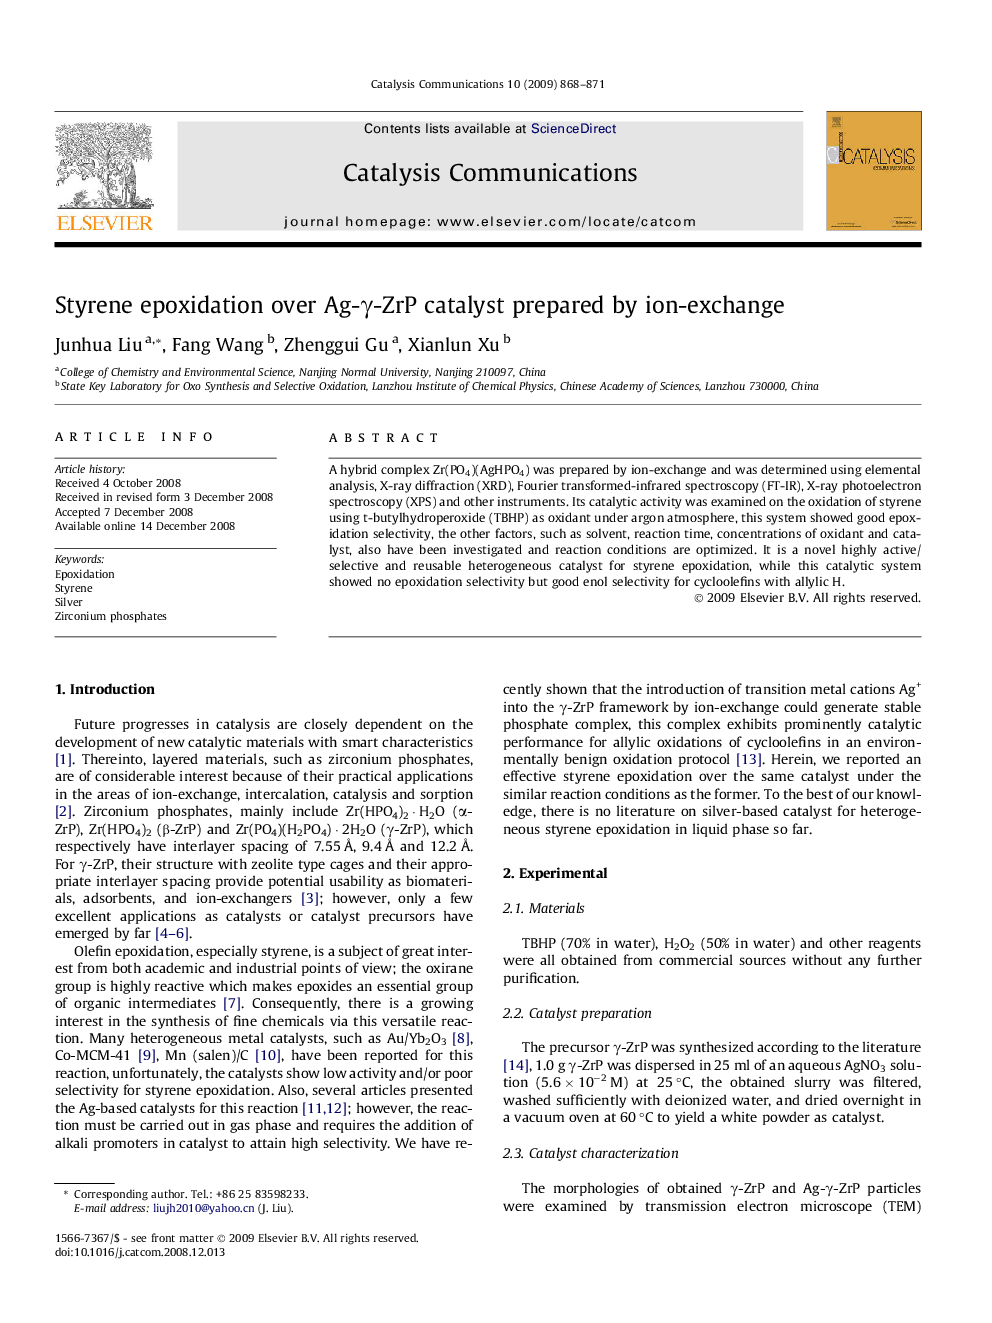 Styrene epoxidation over Ag-γ-ZrP catalyst prepared by ion-exchange